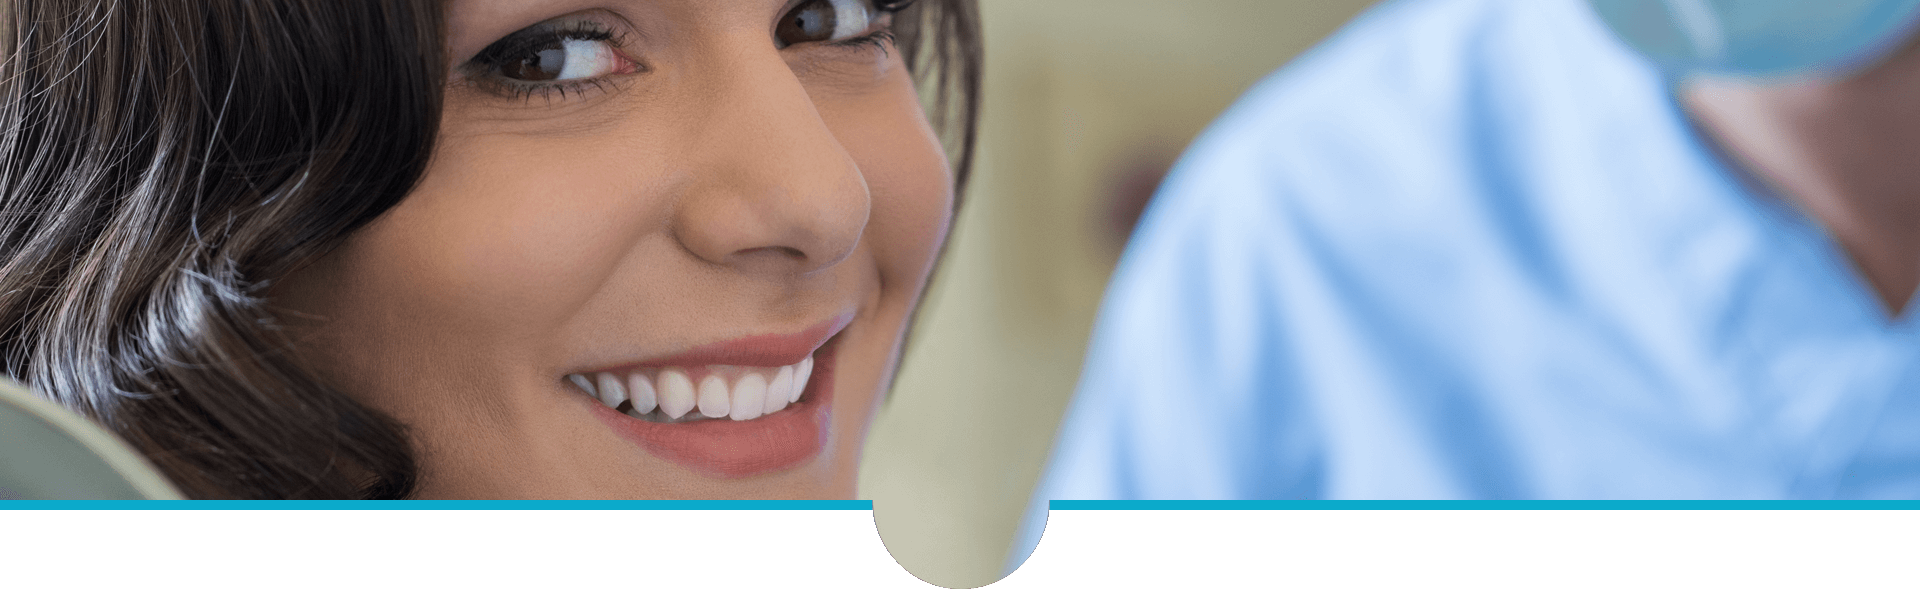 Smiling woman at dental clinic